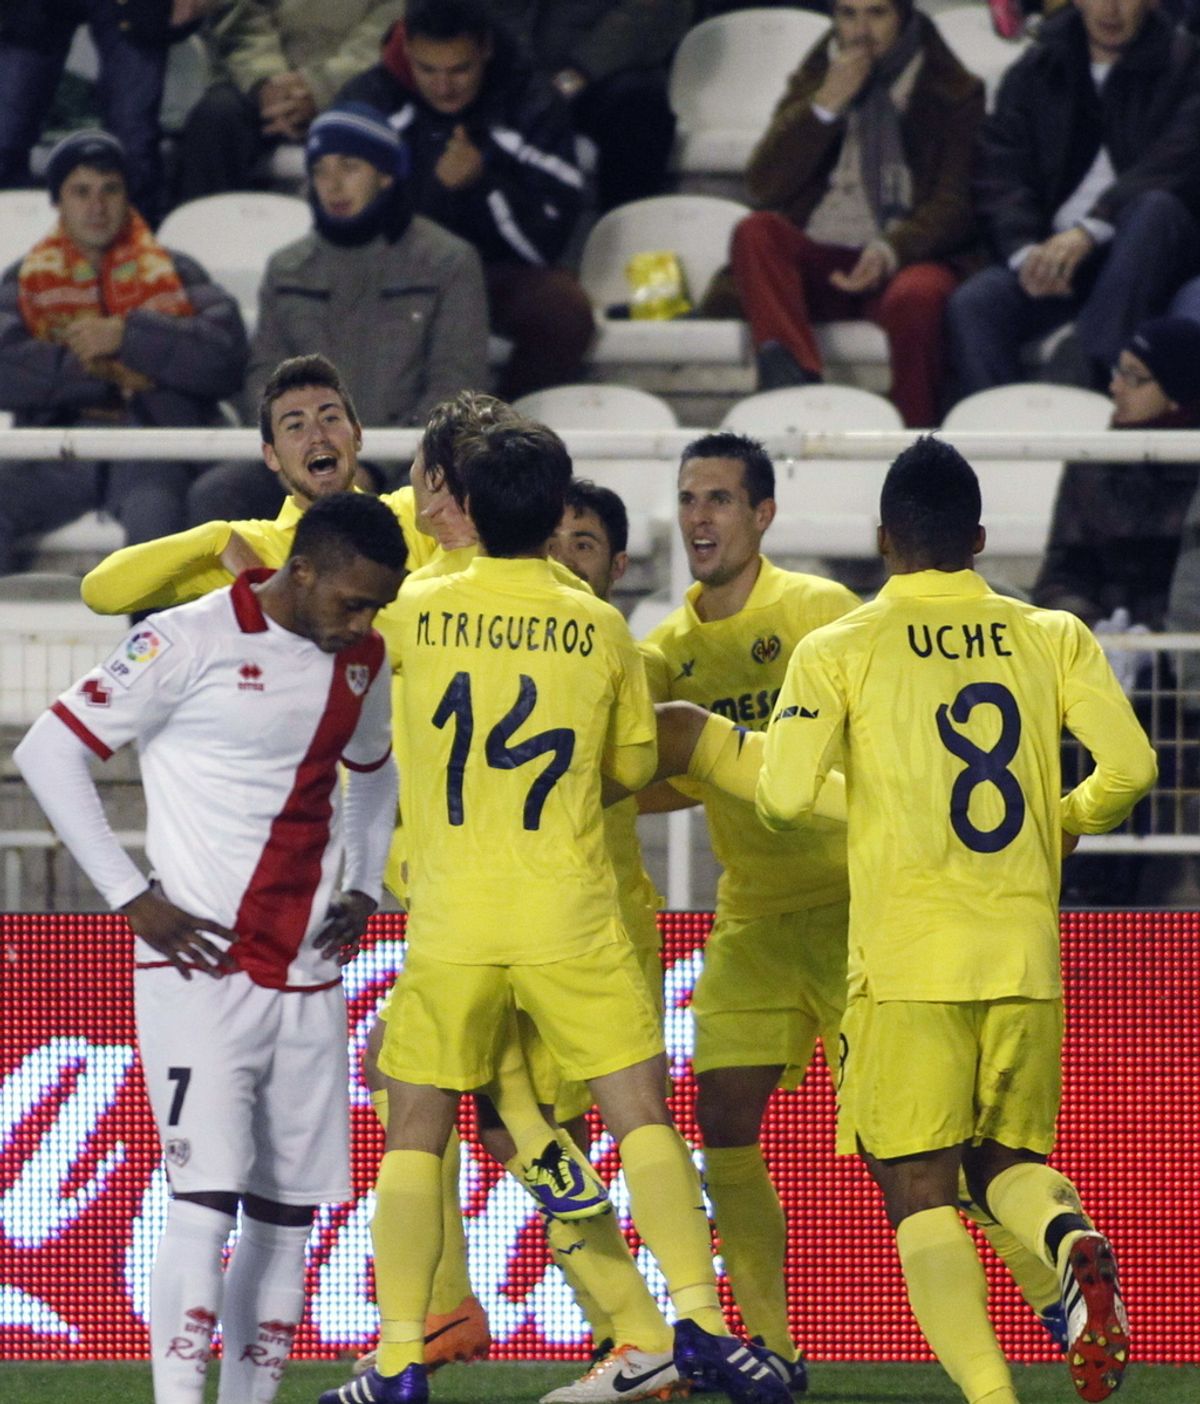 Los jugadores del Villarreal celebran uno de los goles del francés Jeremy Perbet